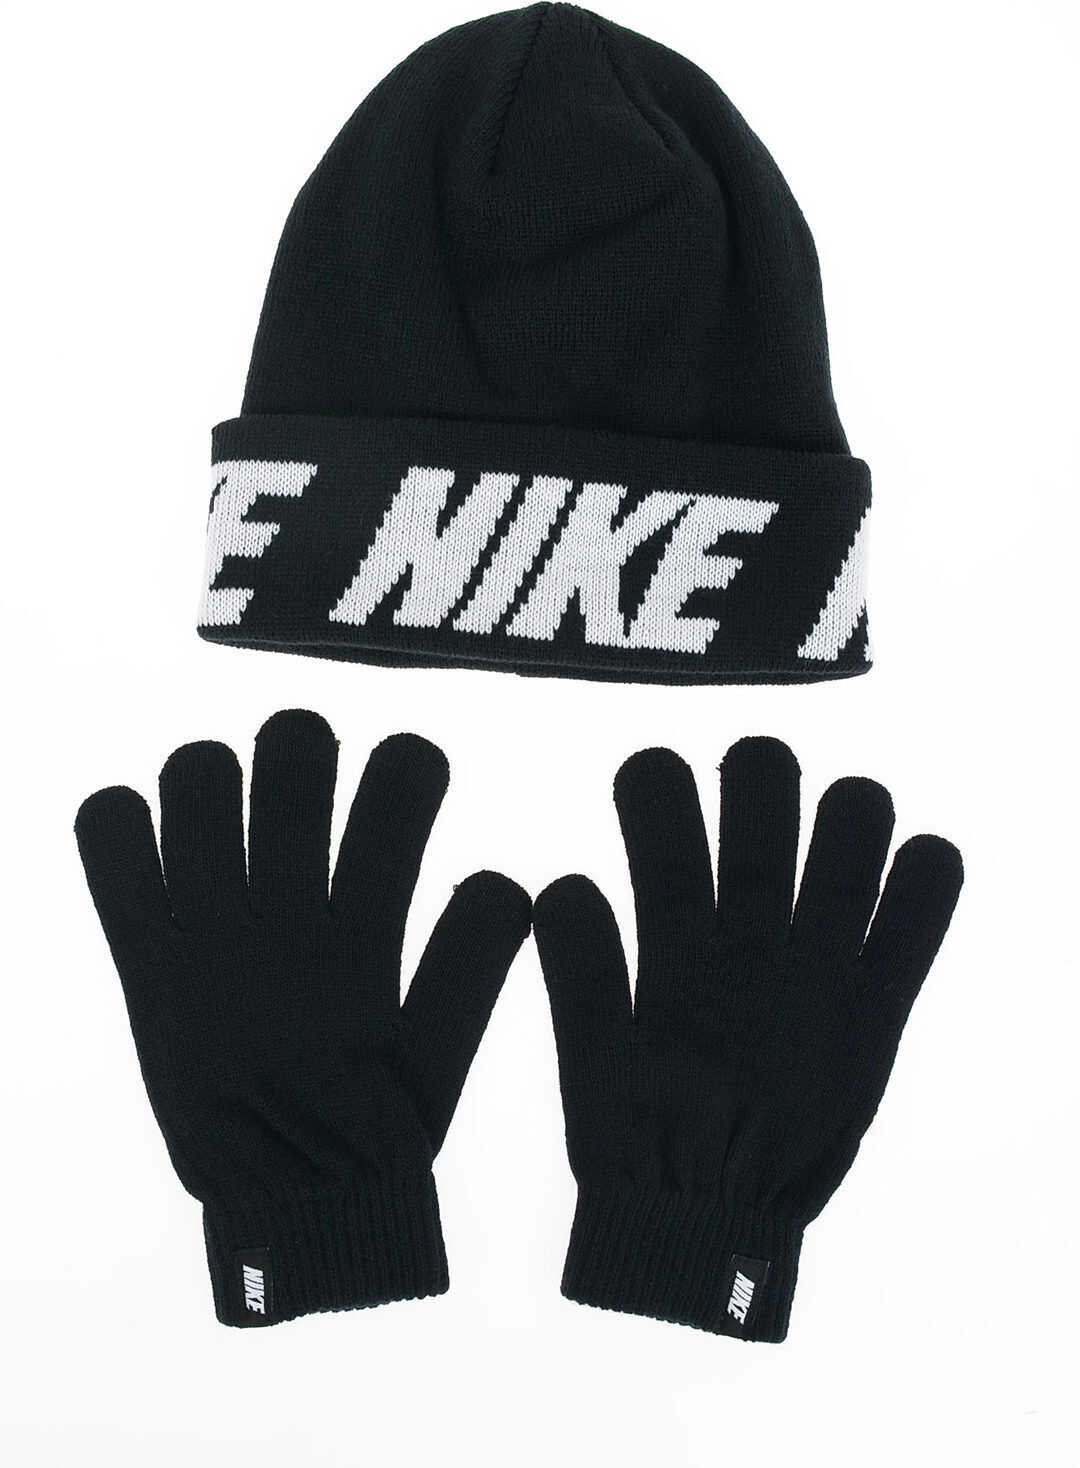 Nike Kids Hat And Glovers Set Black image12